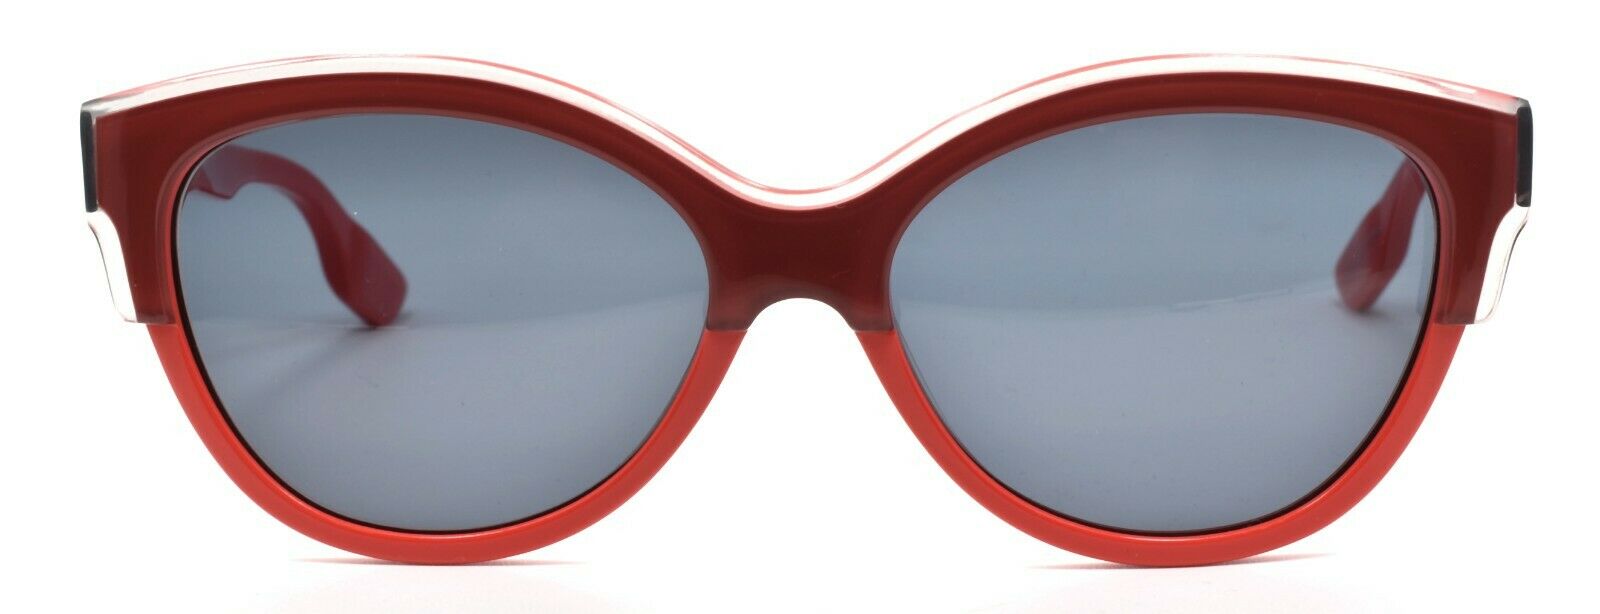 2-McQ Alexander McQueen MQ0026O 003S Women's Sunglasses Cat-eye Pink Coral / Grey-191966062420-IKSpecs